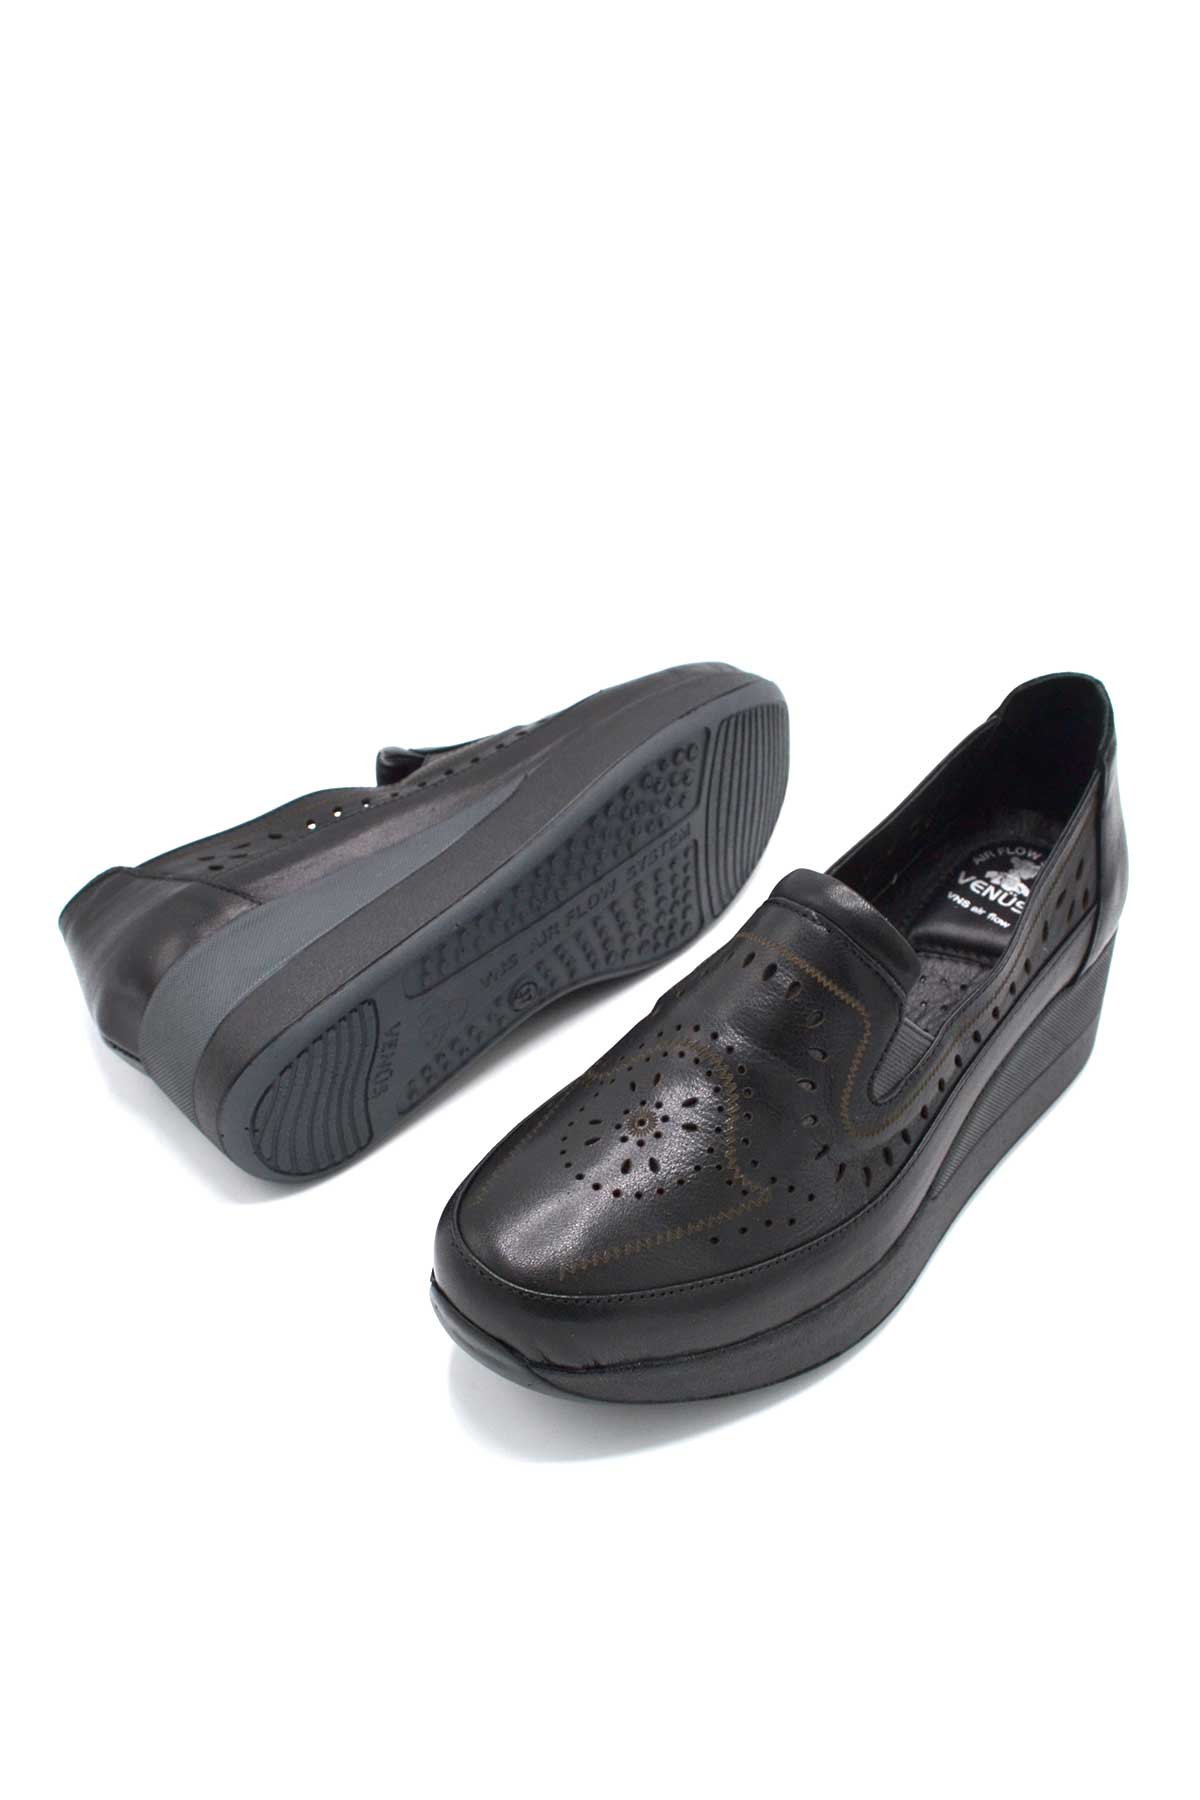 Kadın Airflow Deri Ayakkabı Siyah 2211701Y - Thumbnail